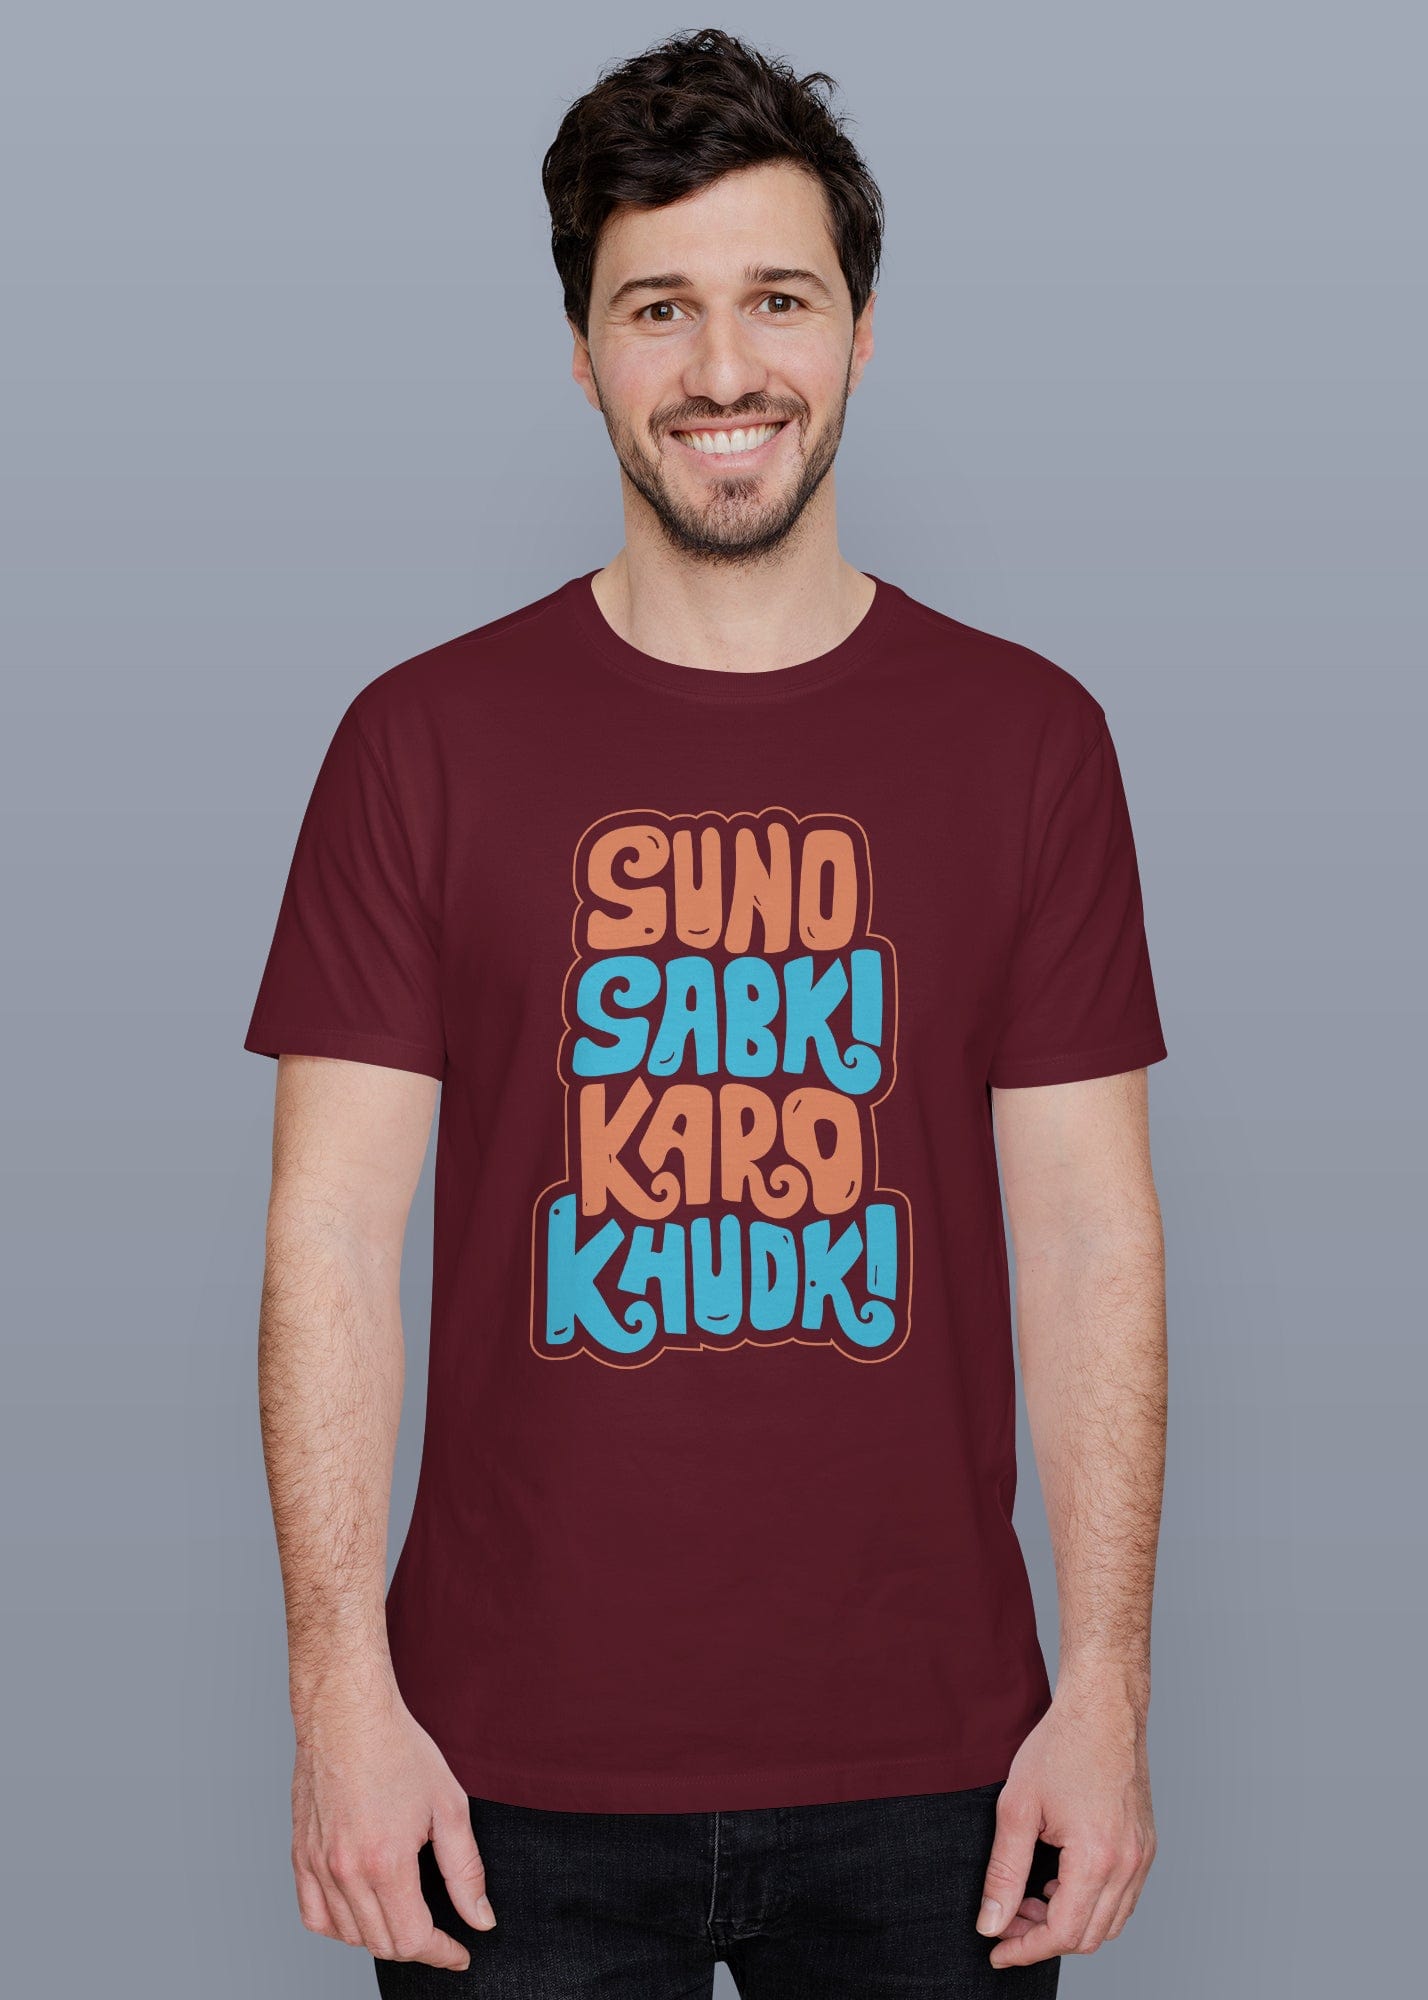 Suno Sabki Printed Half Sleeve Premium Cotton T-shirt For Men